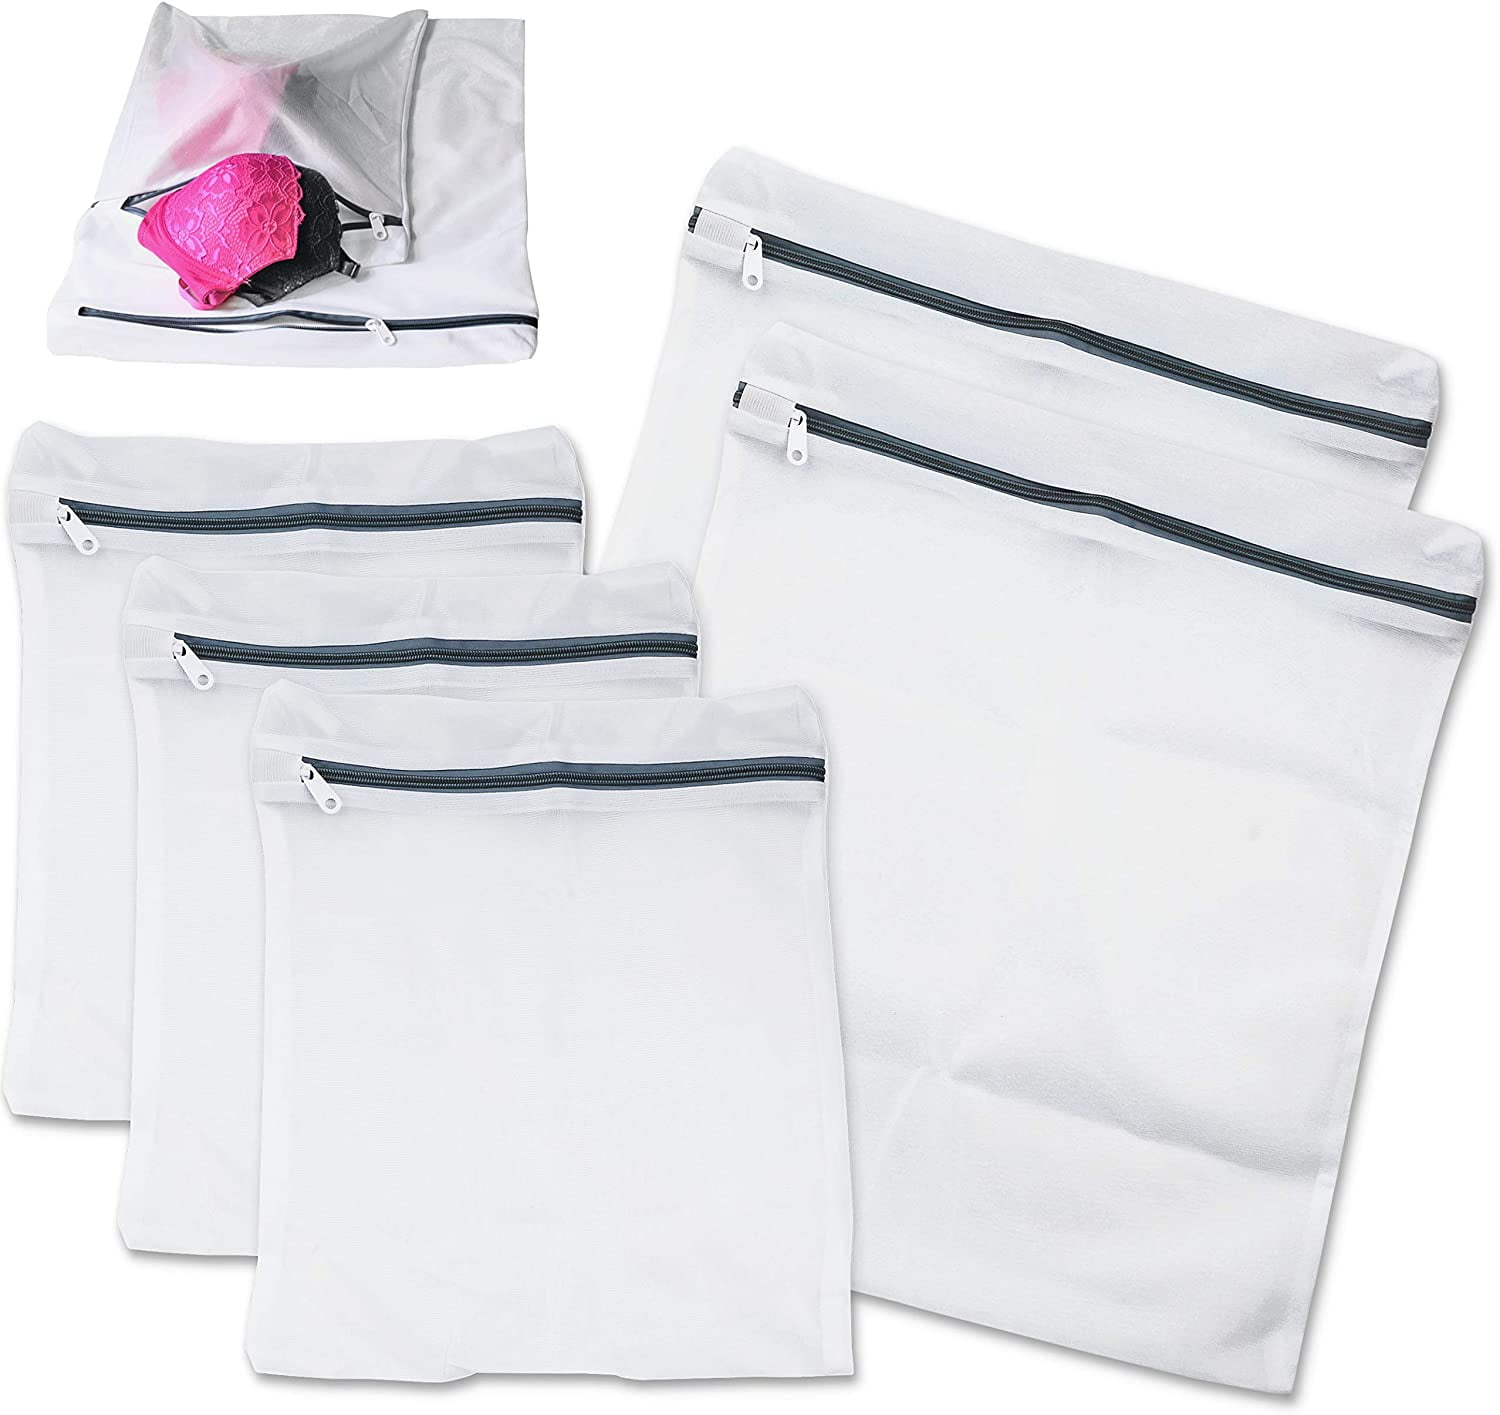 Mesh Laundry Bag Bra Underwear Care bag Washing Machine Travelling Storage Bag 